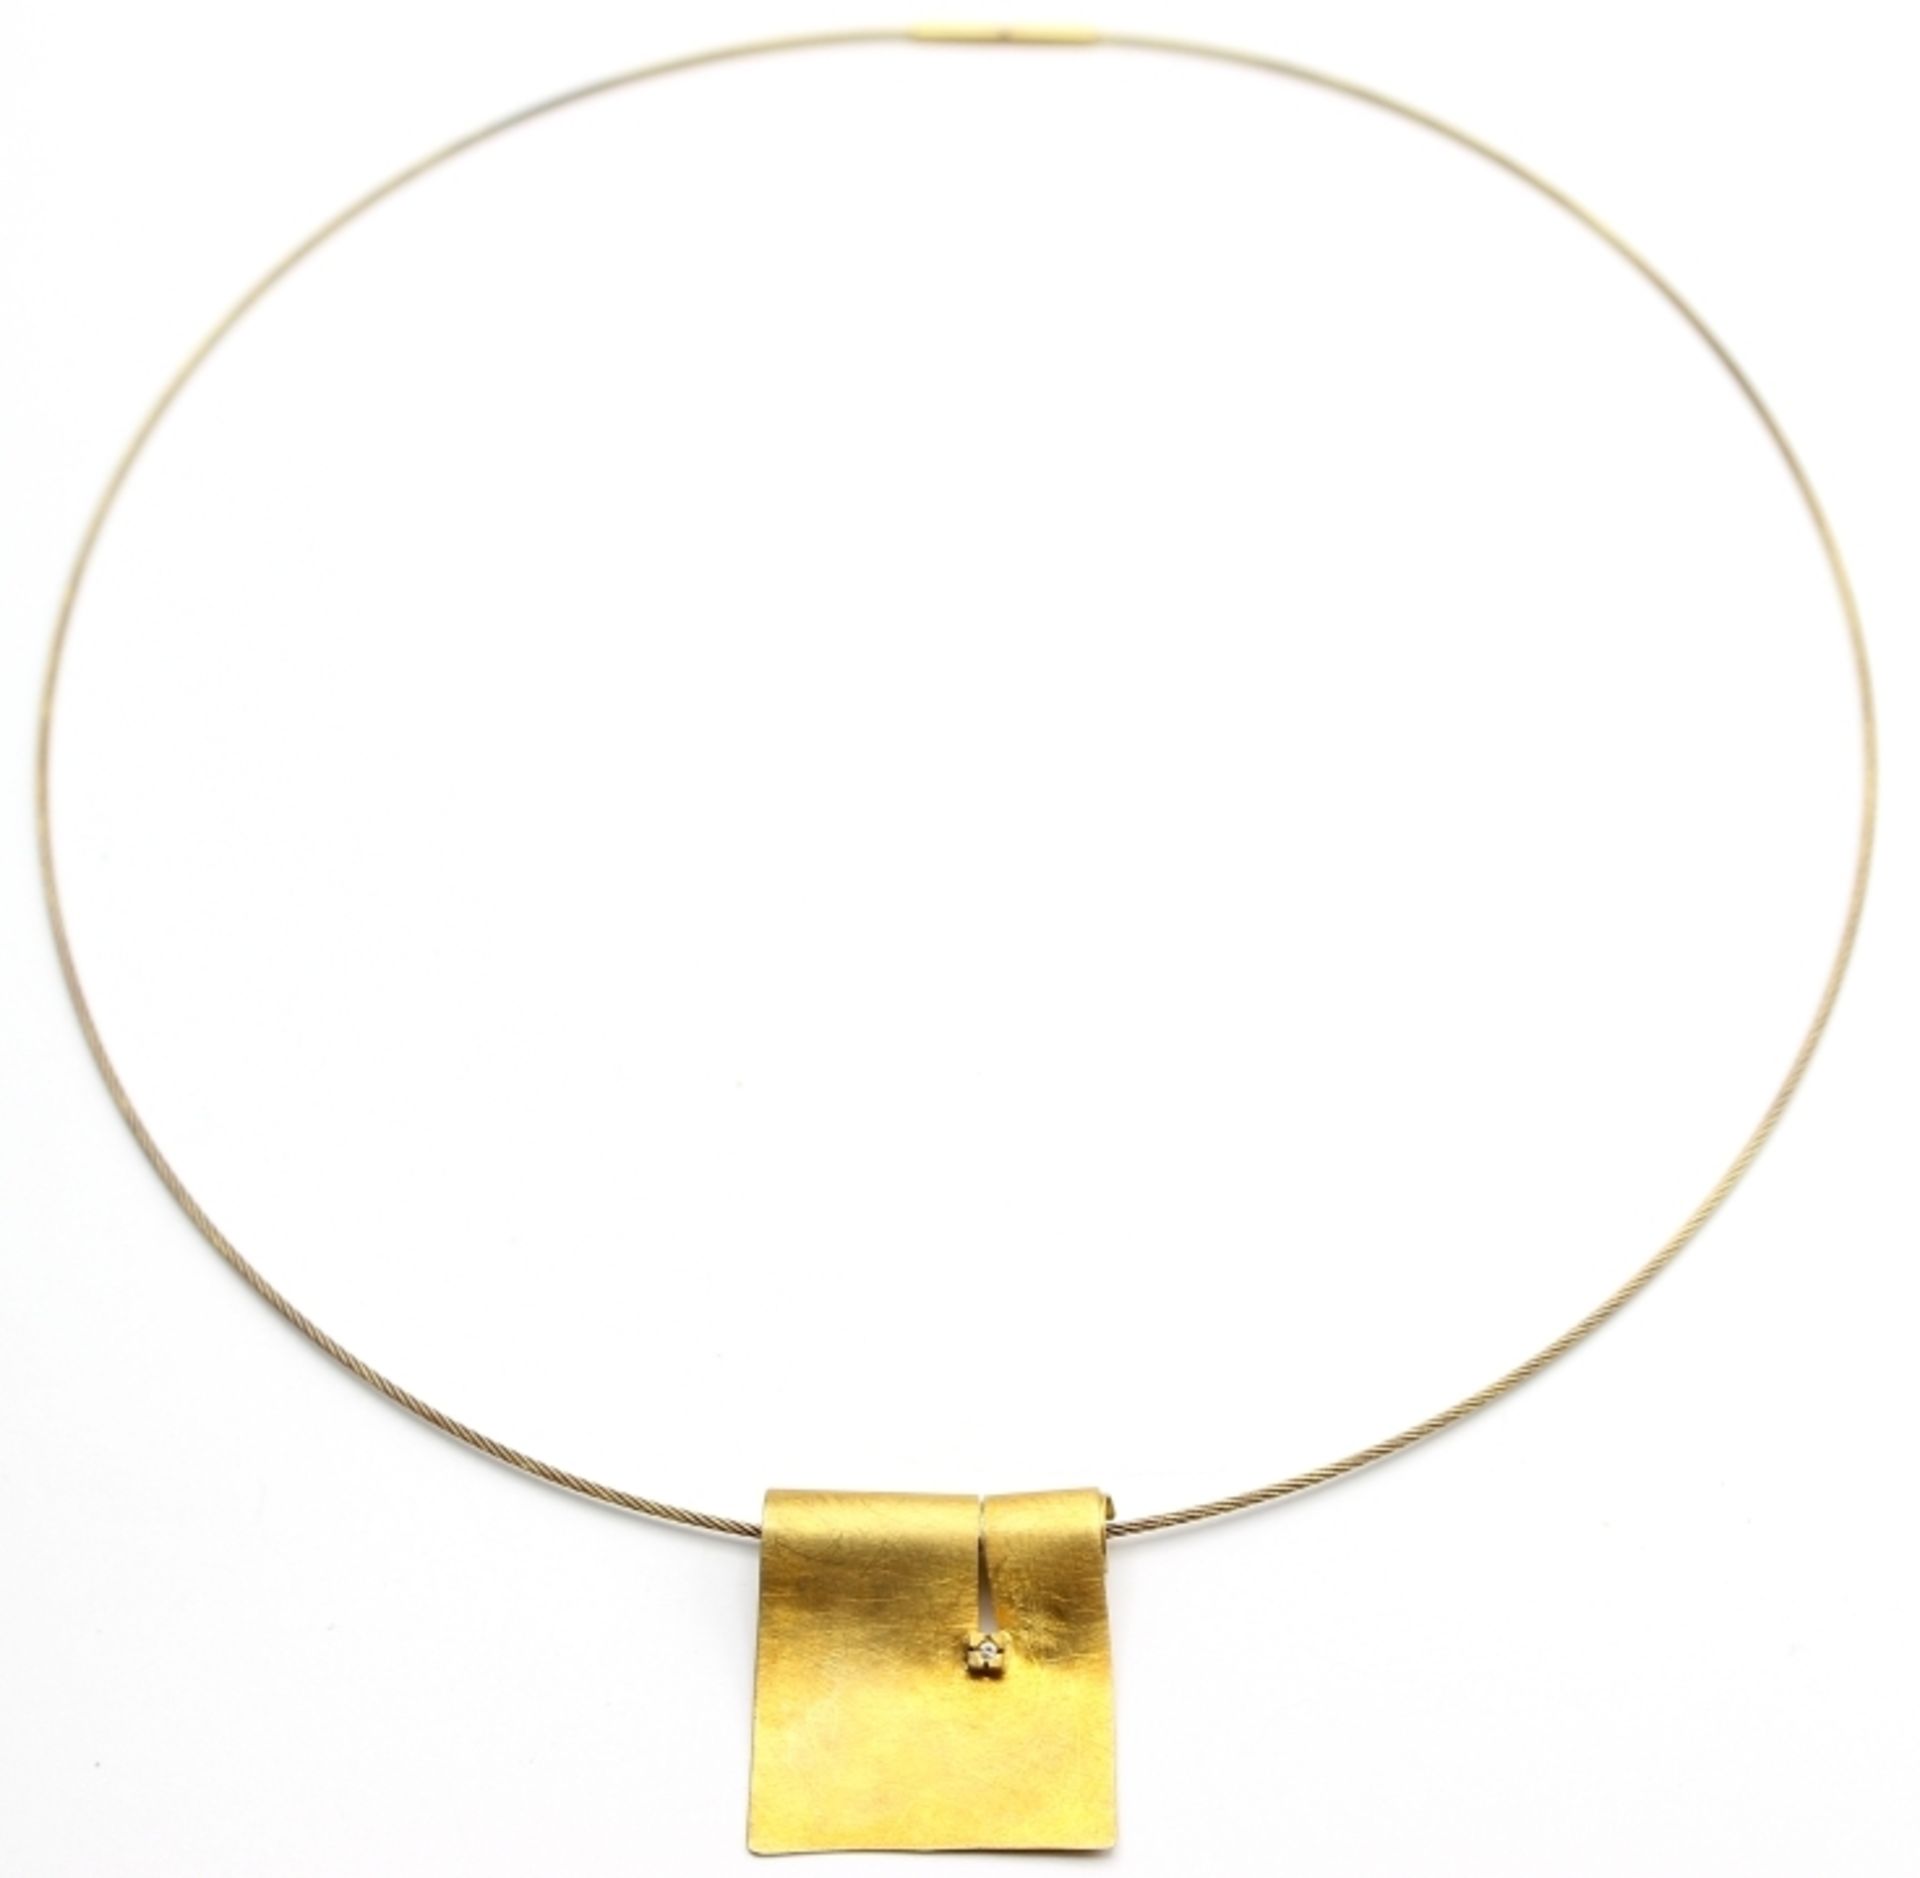 Modernes Collier - Silber vergoldet an Reif, Kunstgewerbe Gewürz-Eckerl Regensburg